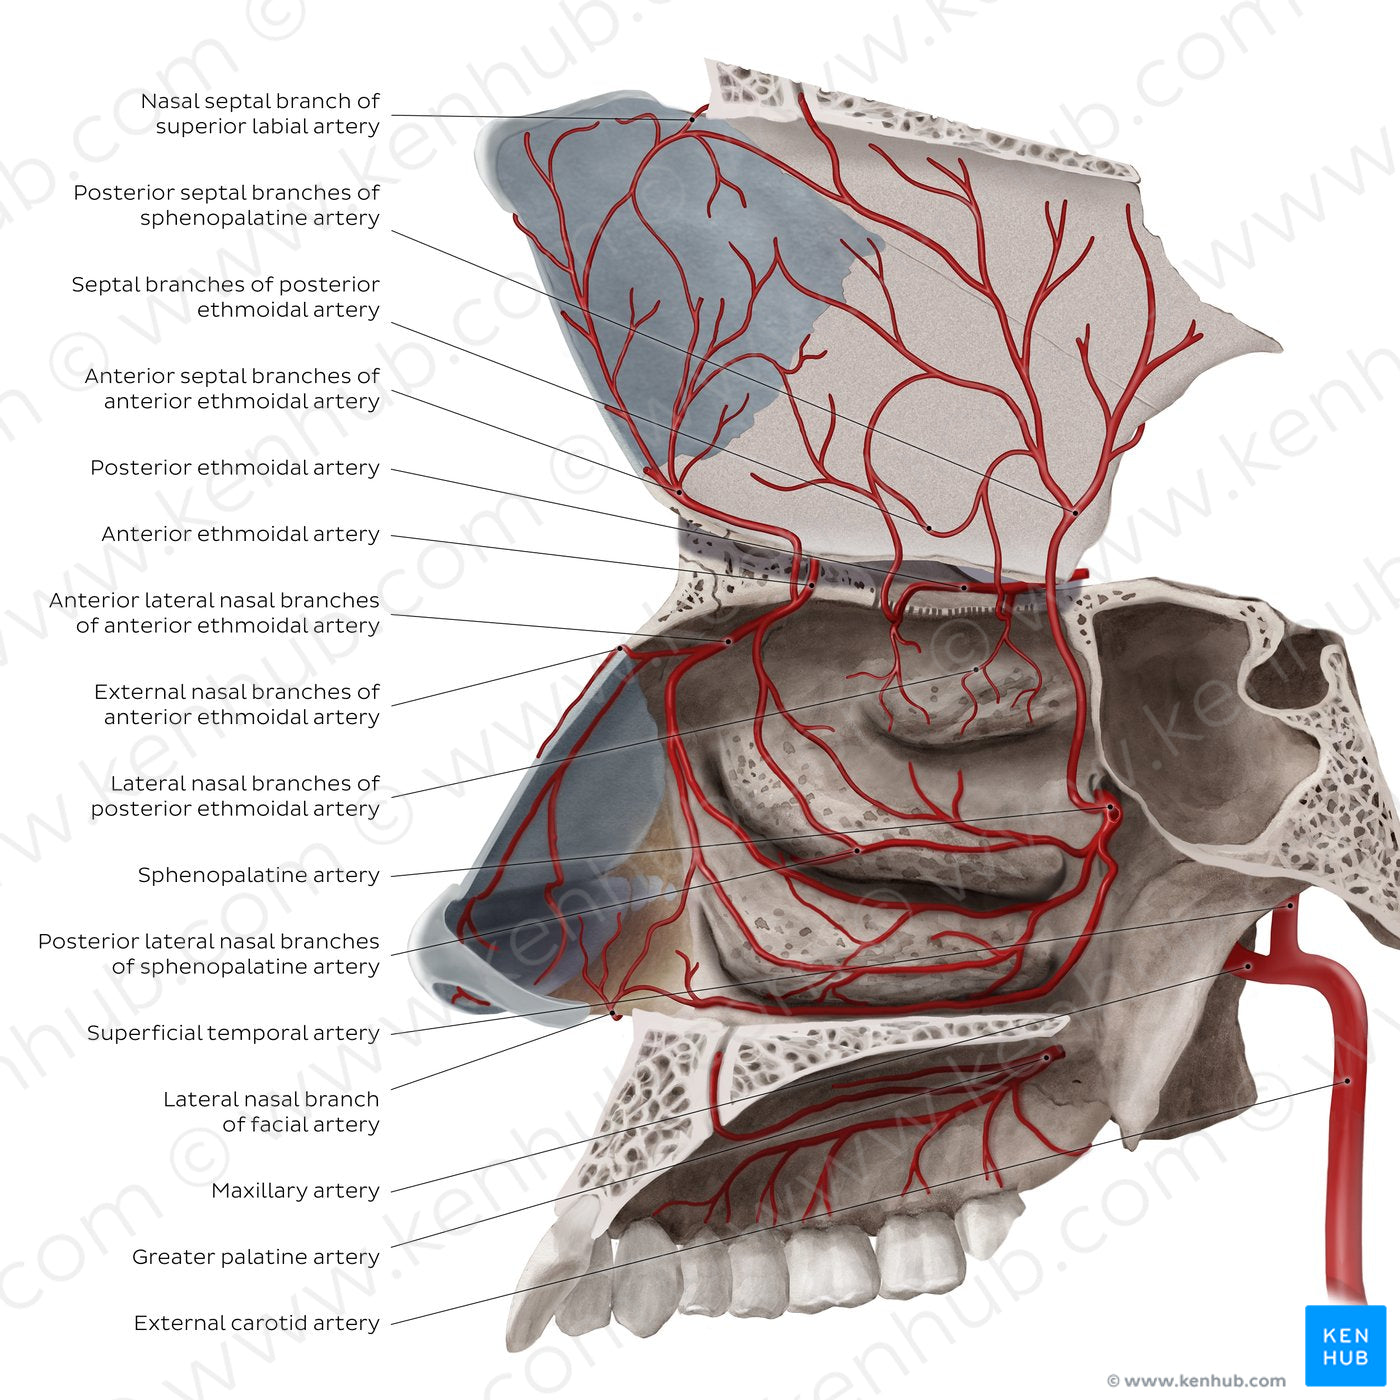 Arteries of the nasal cavity (English)